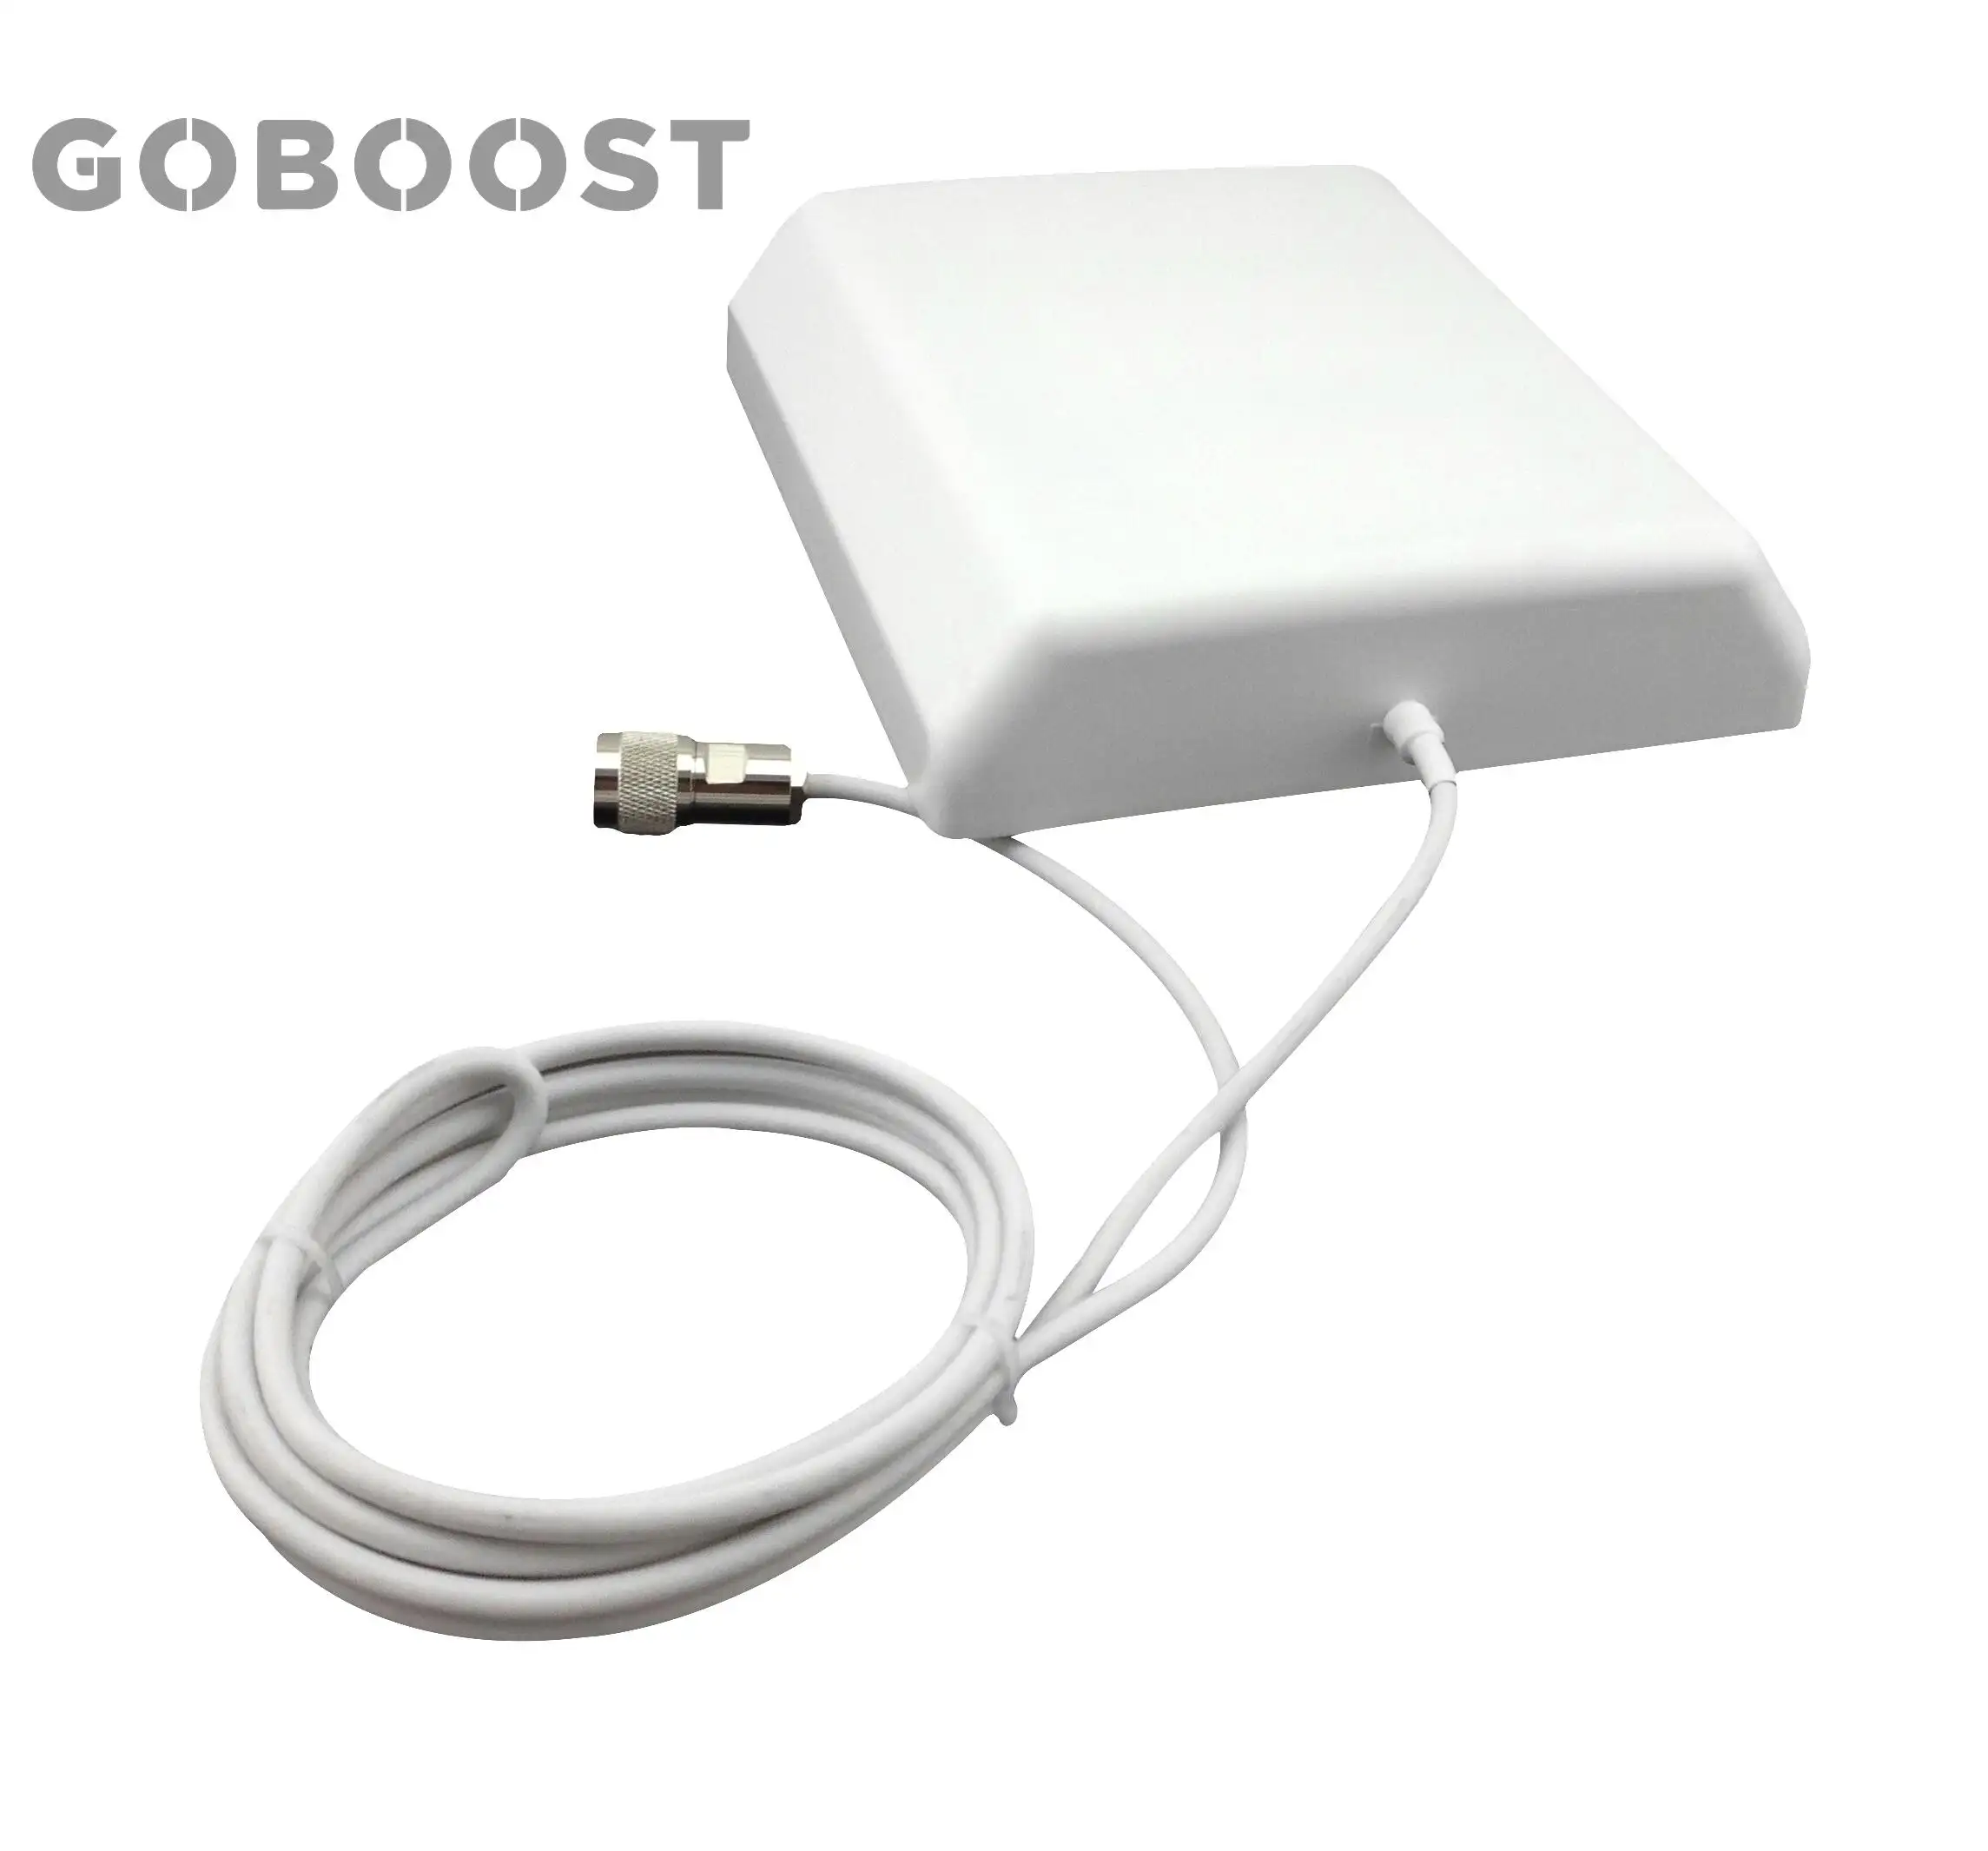 Goboost แผงสัญญาณ2G 3G 4G คุณภาพสูง,สำหรับระบบ CDMA/GSM/AWS/DCS/PCS/WCDMA MHz